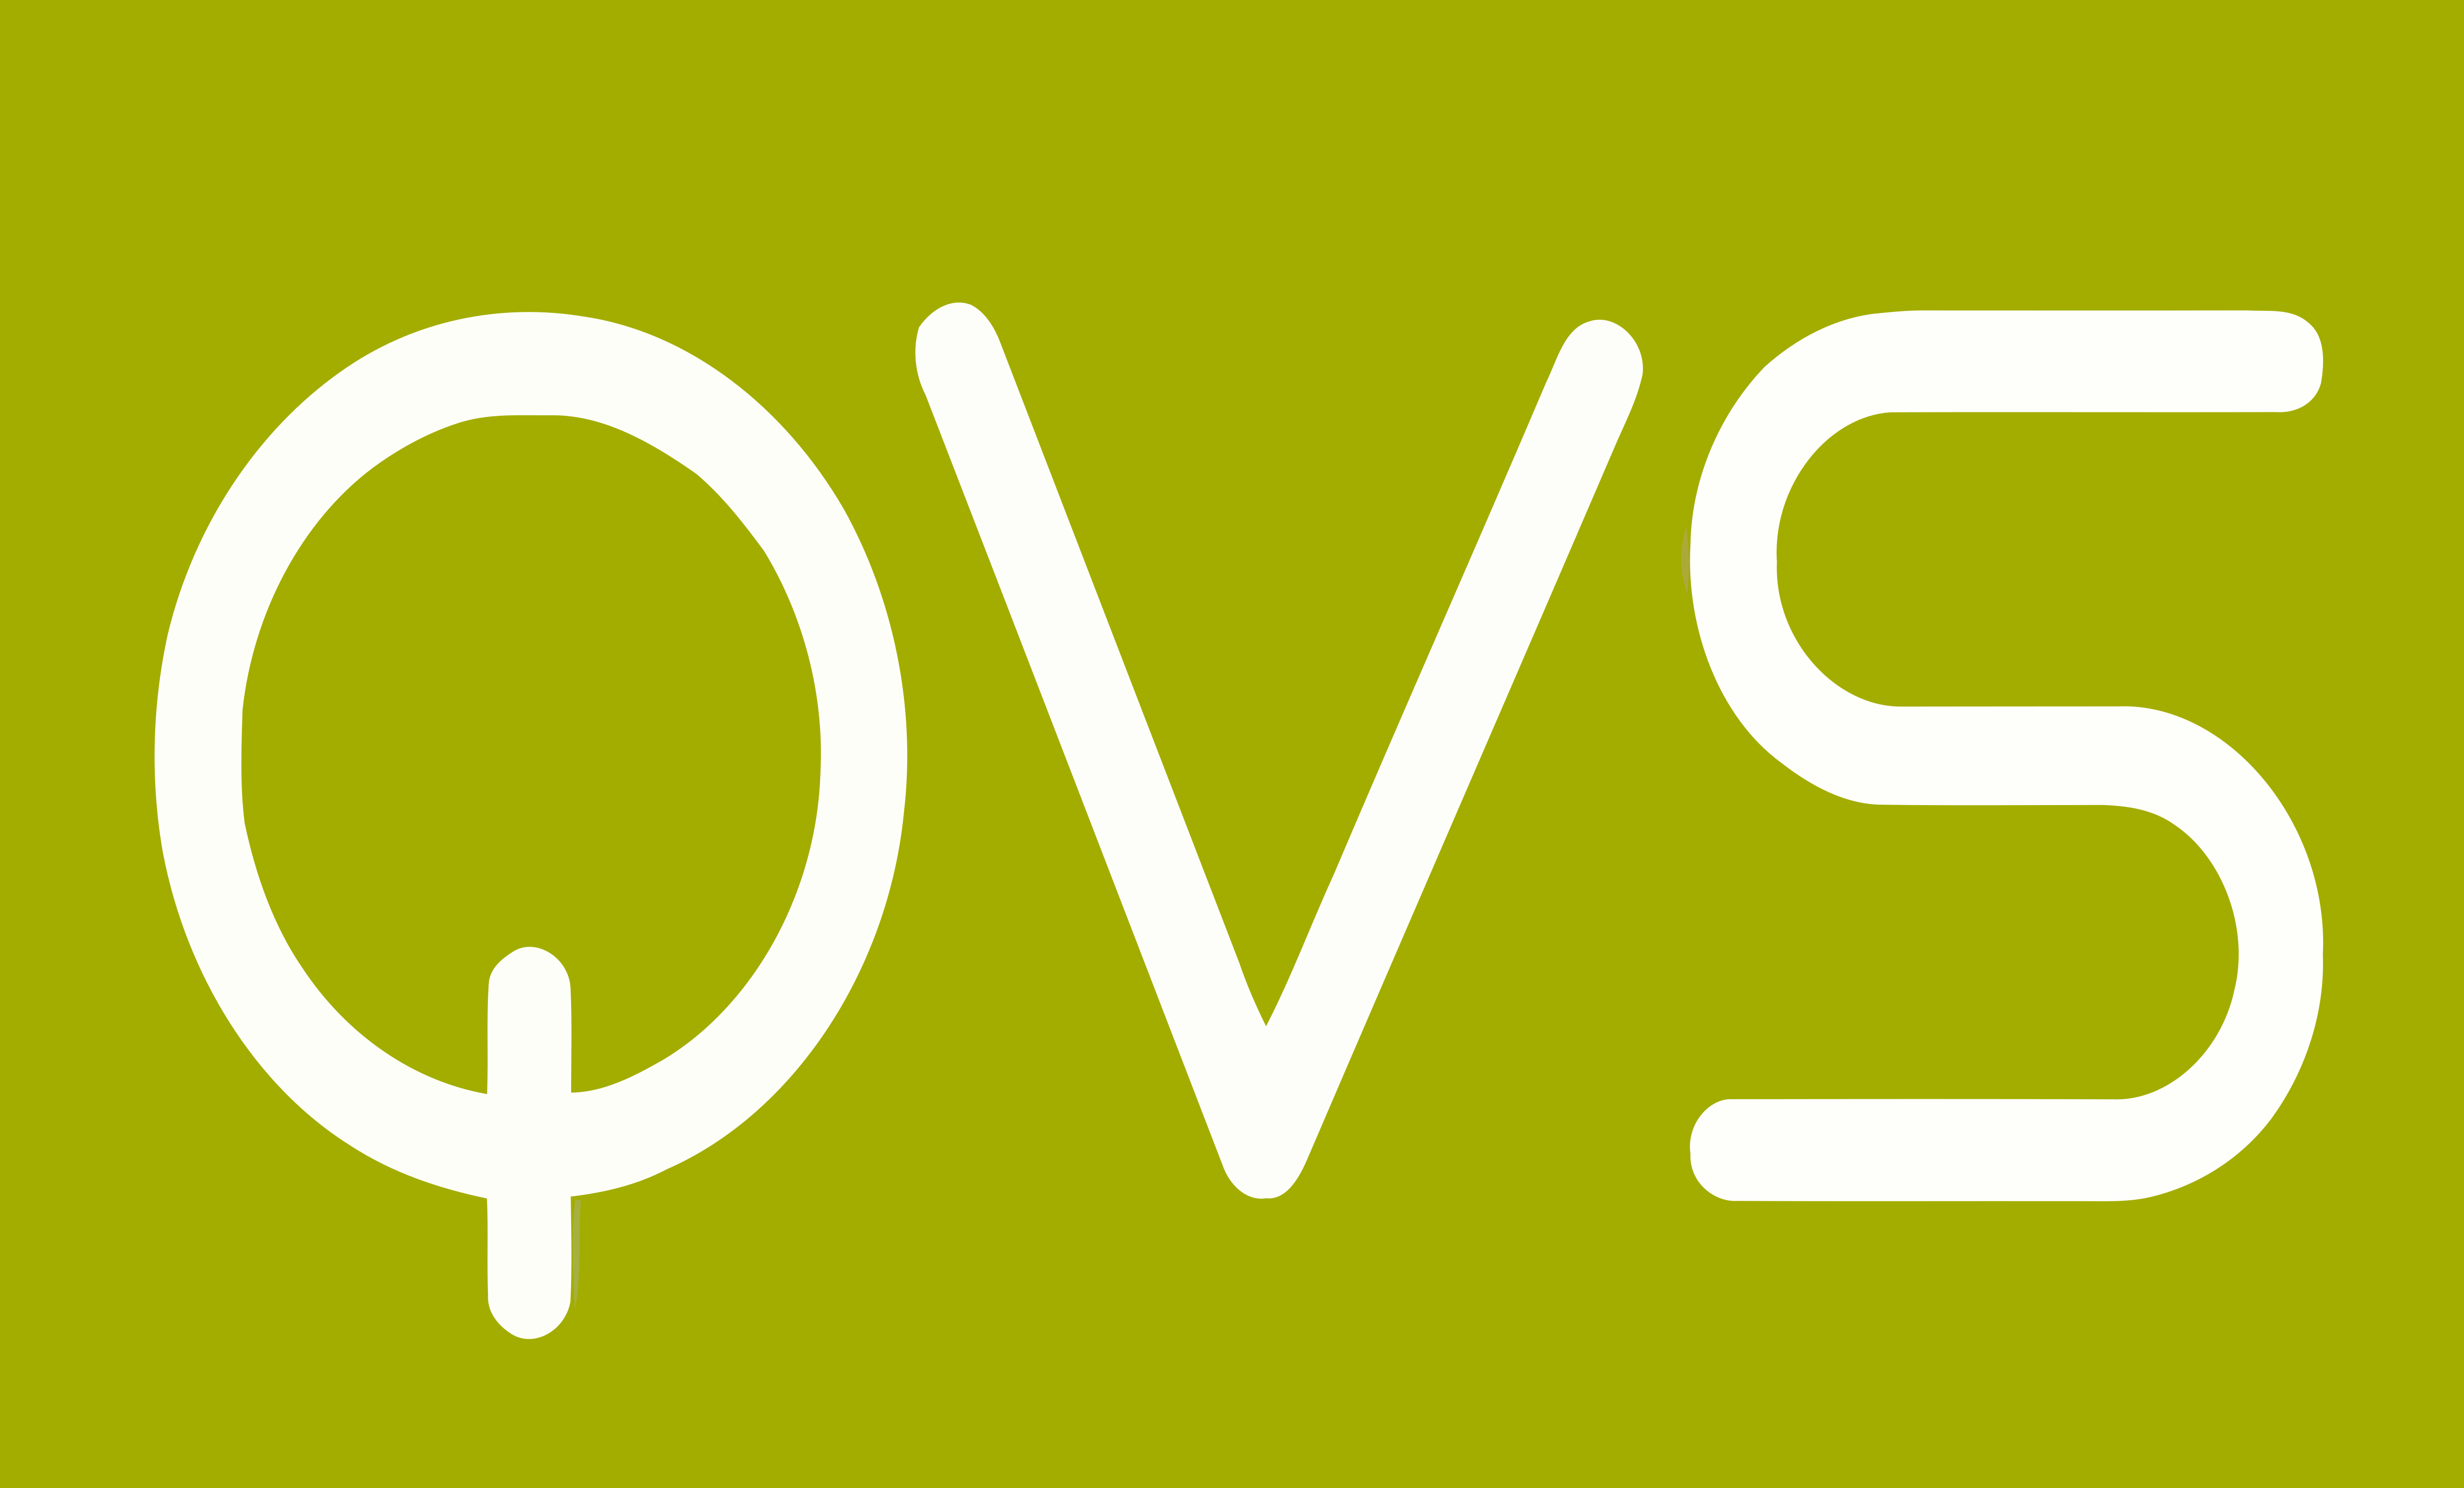 Quality value. Логотип QVS. Value лого. Qualita логотип. Eurostyle logo.